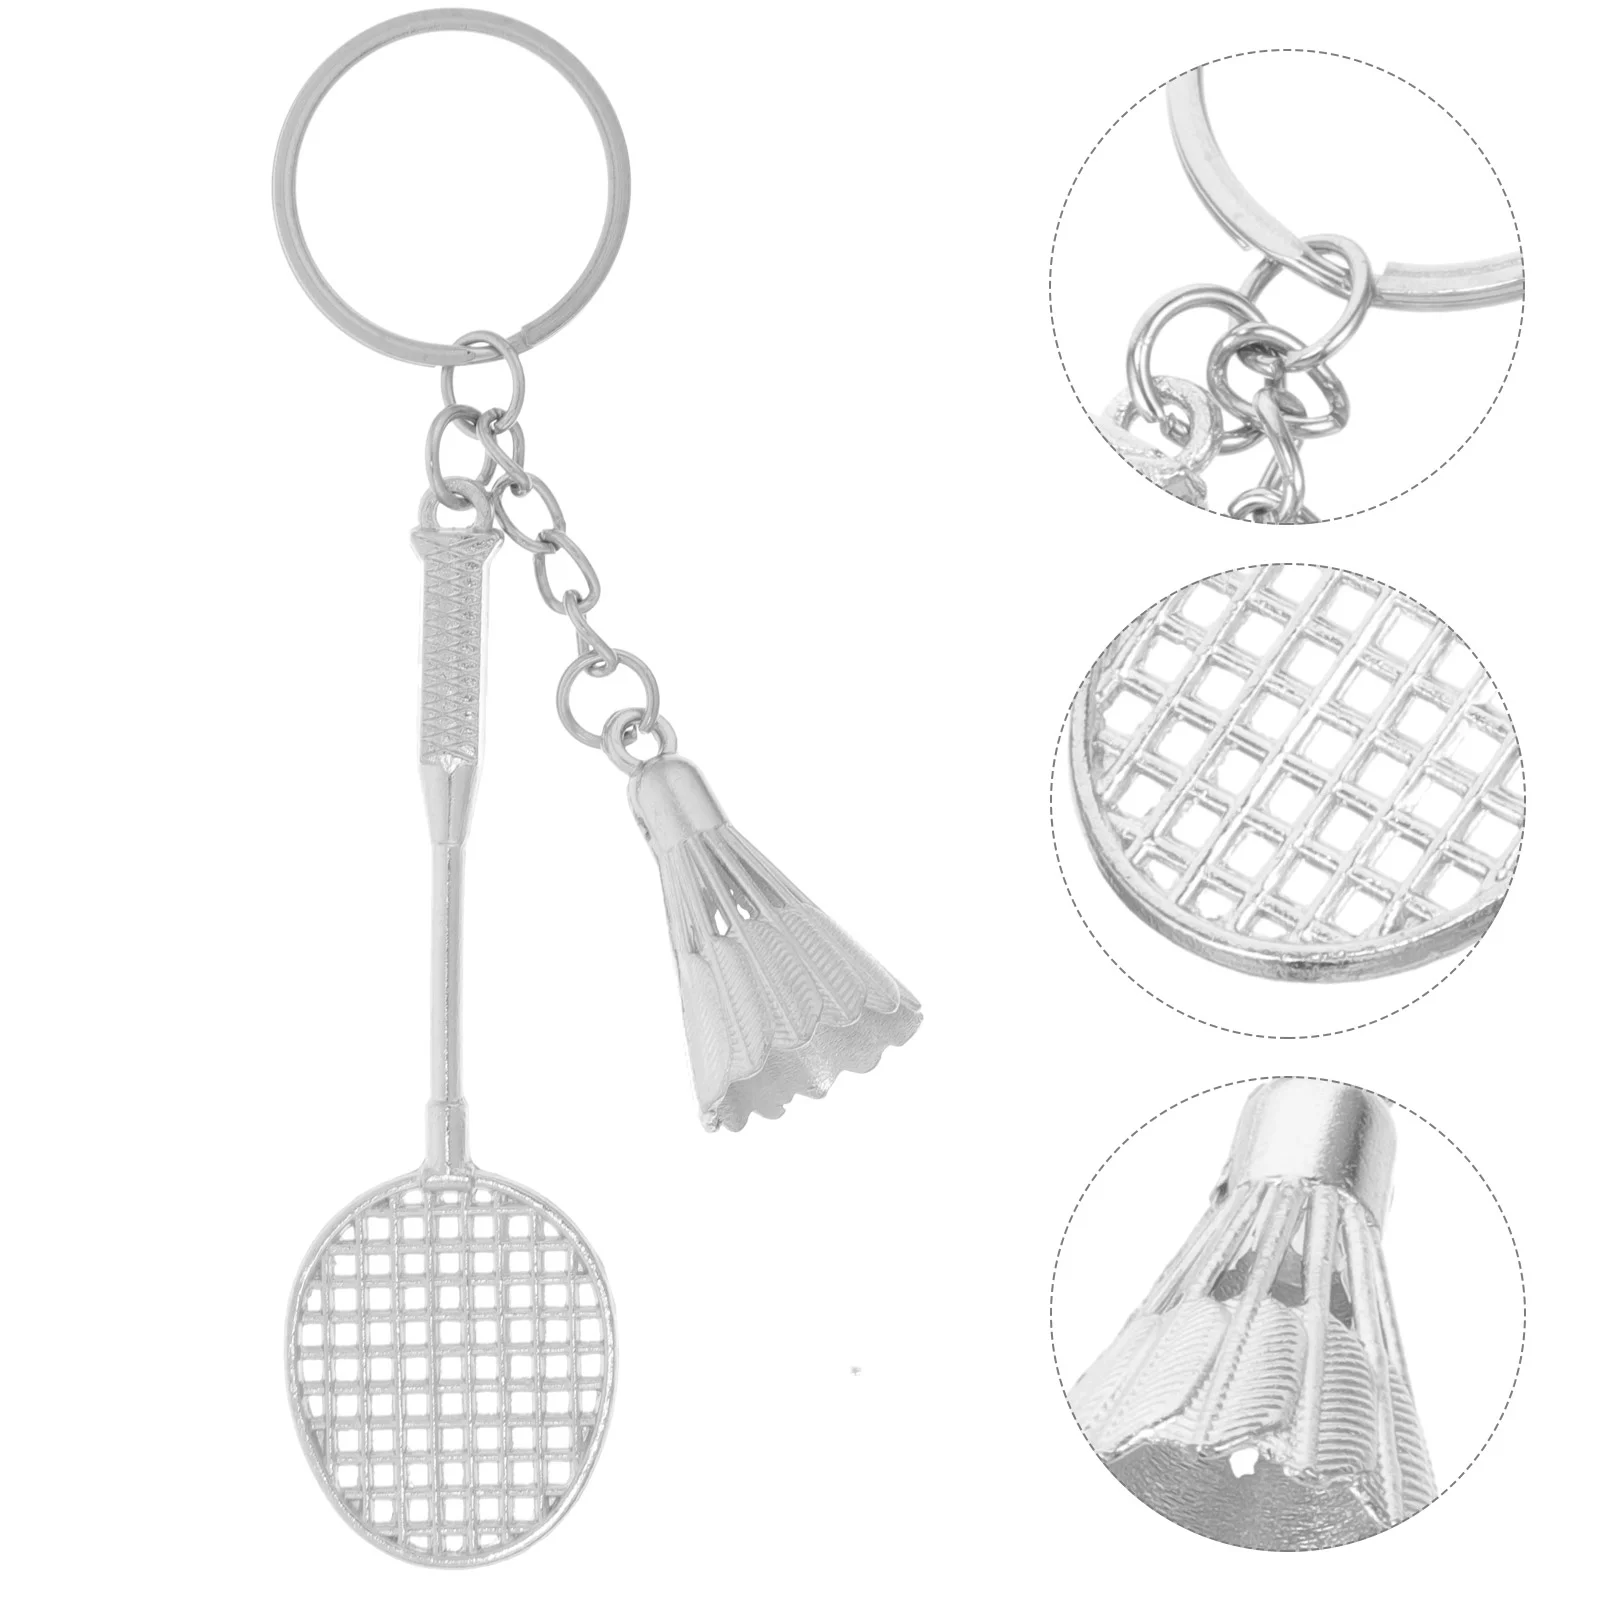 

2 Pcs Metal Keychain Fob Badminton Ring Ball Keychains Pendant Trinket Decorative Rings